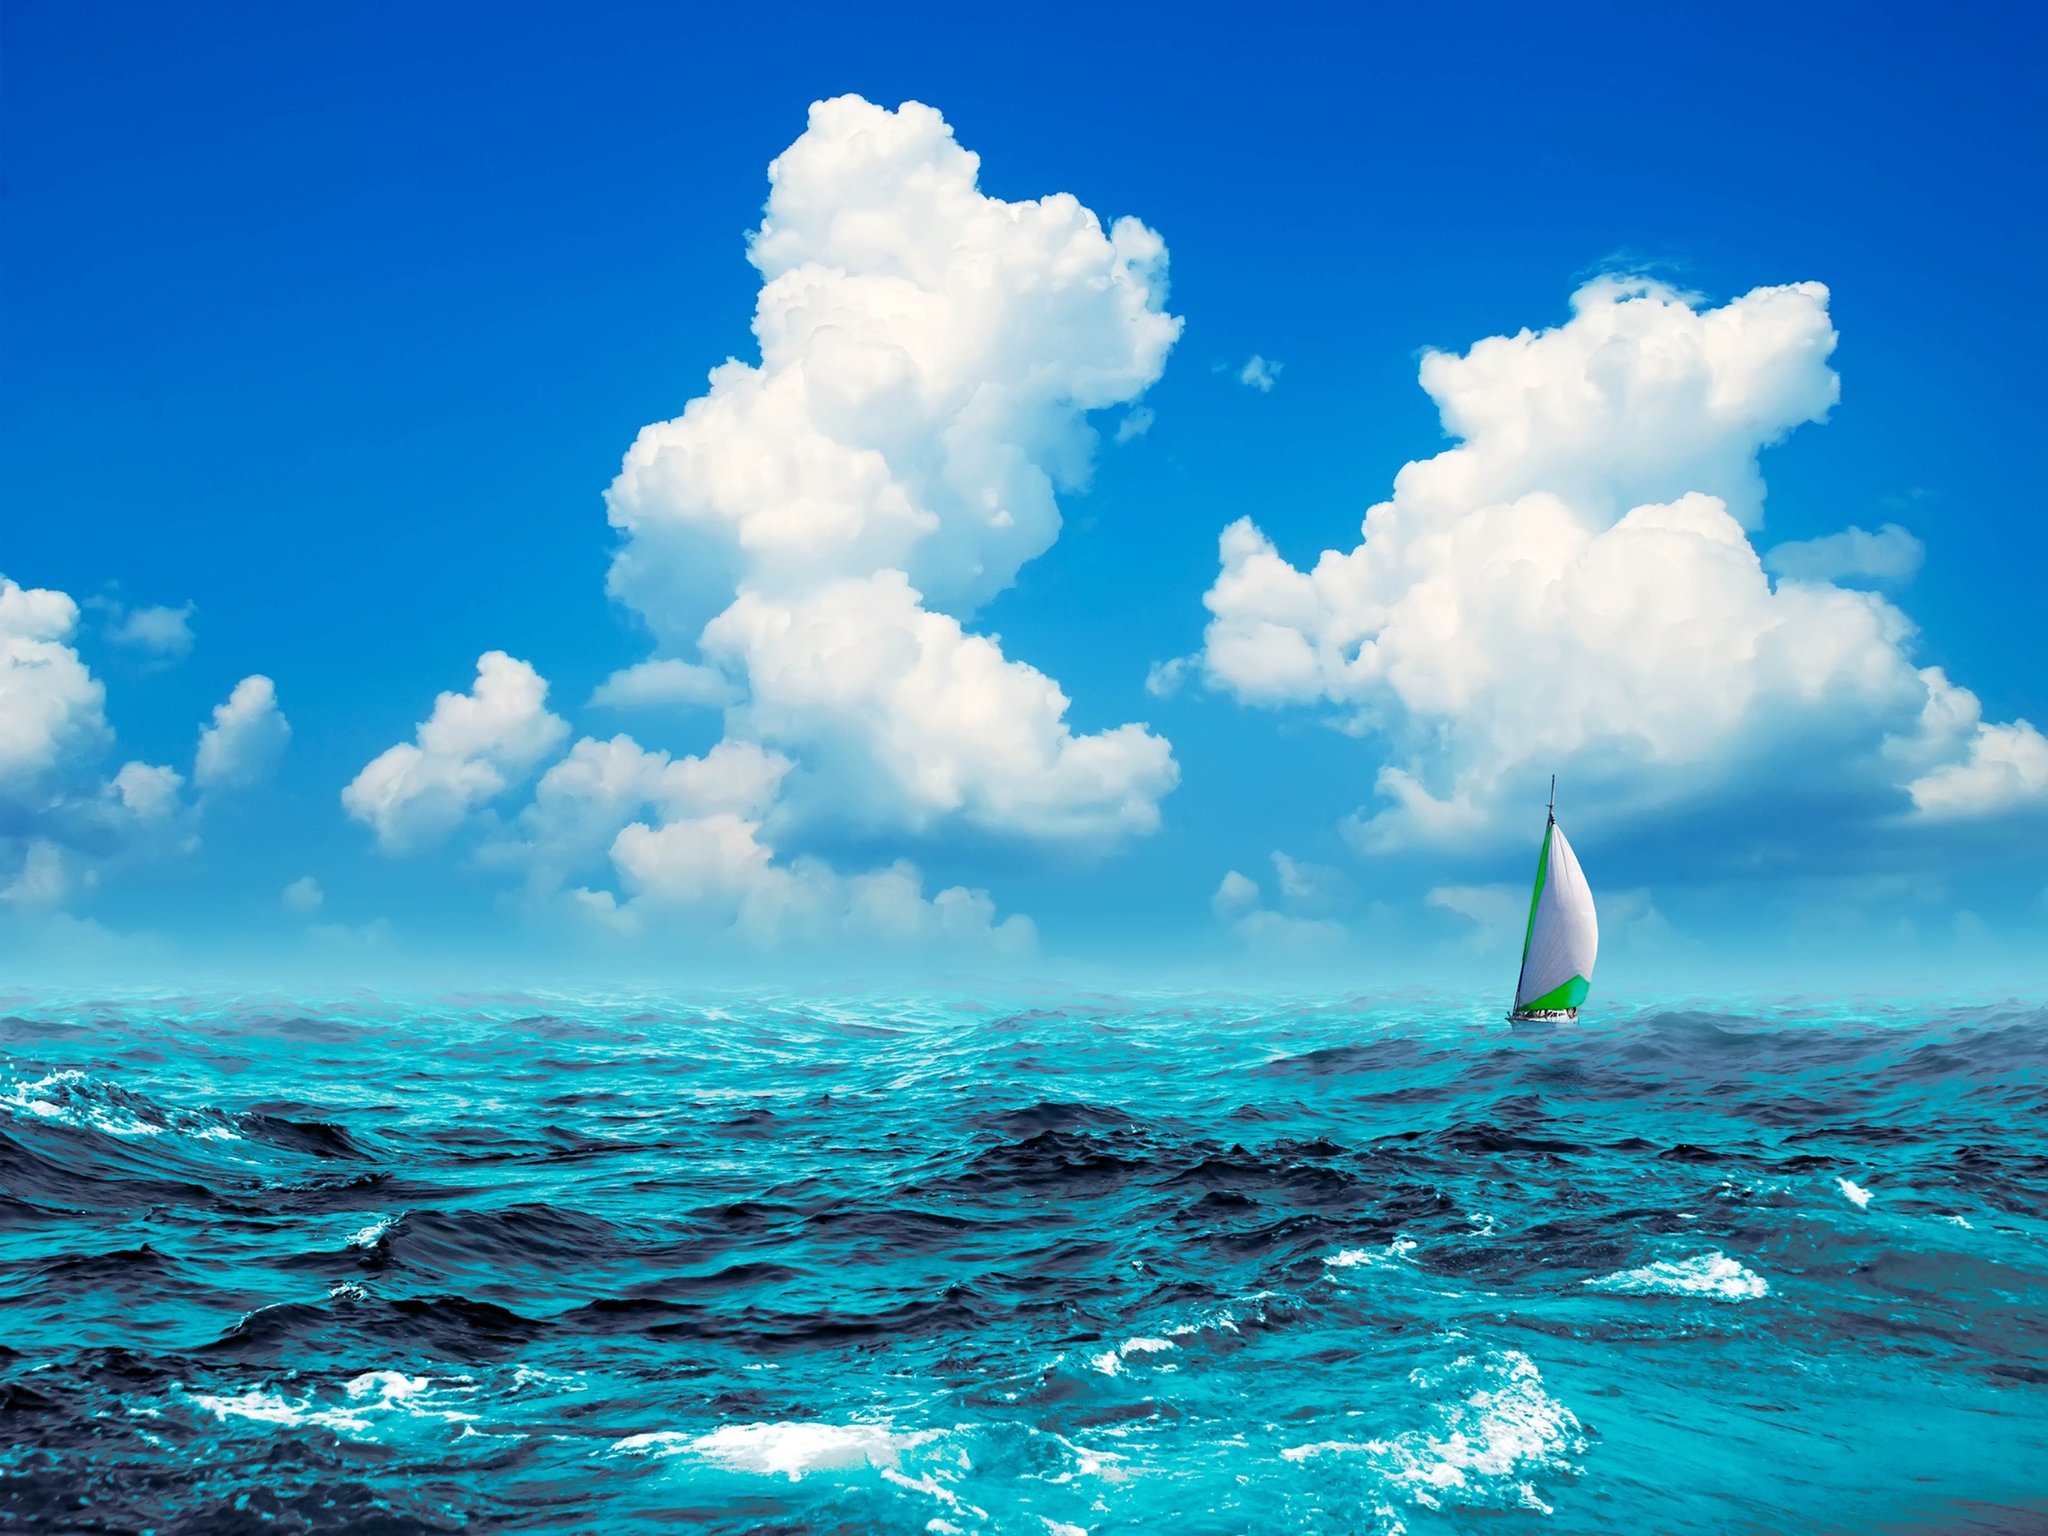 Картинка: Небо, голубое, облака, море, океан, волны, парус, лодка